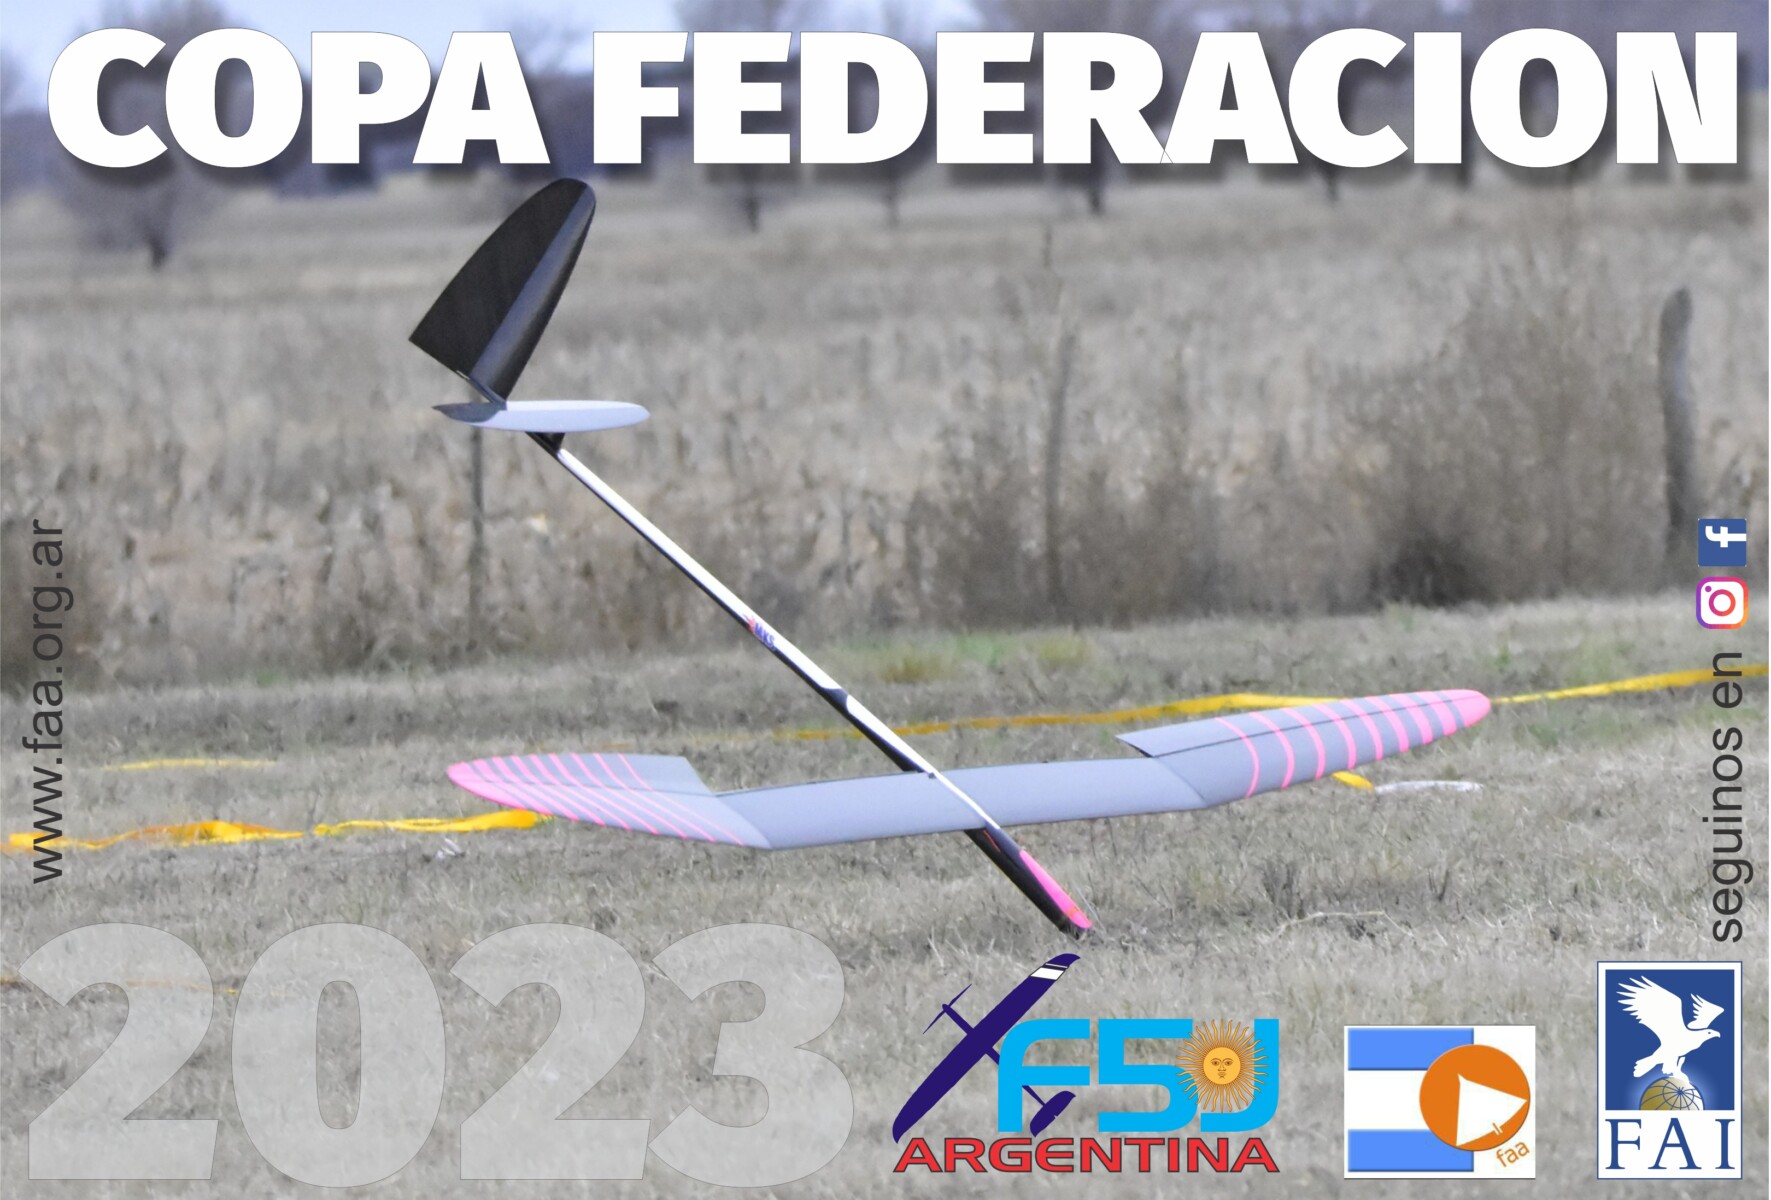 Federación Argentina de Aeromodelismo Miembro activo de la Federación Aeronáutica Internacional FAI